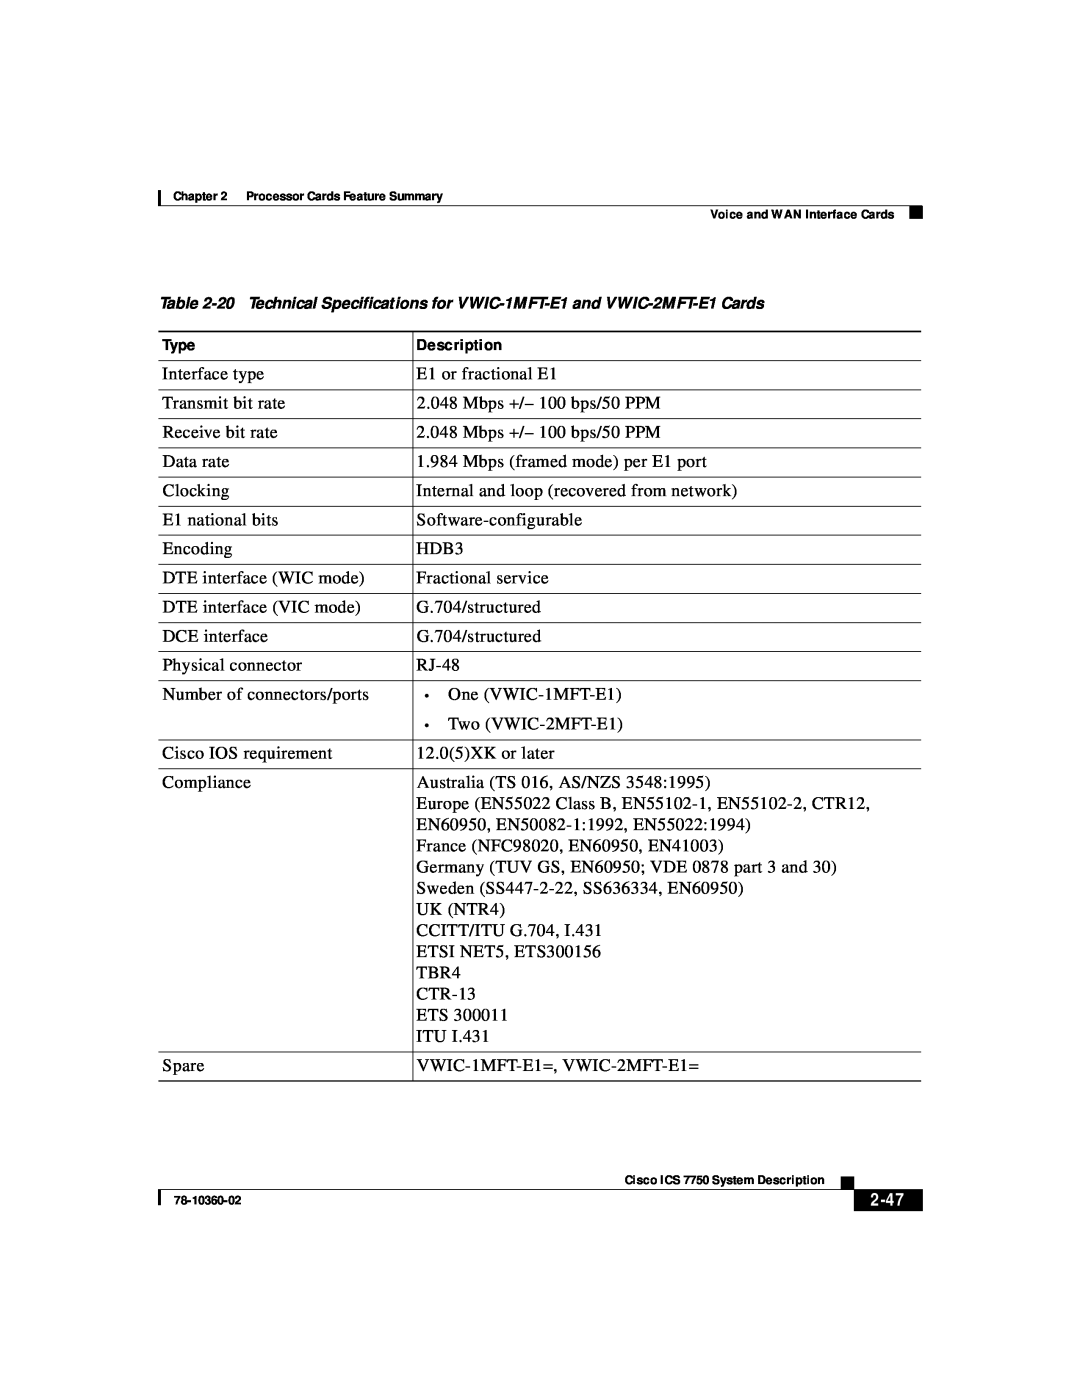 Cisco Systems ICS-7750 manual Type, Description, 2-47 